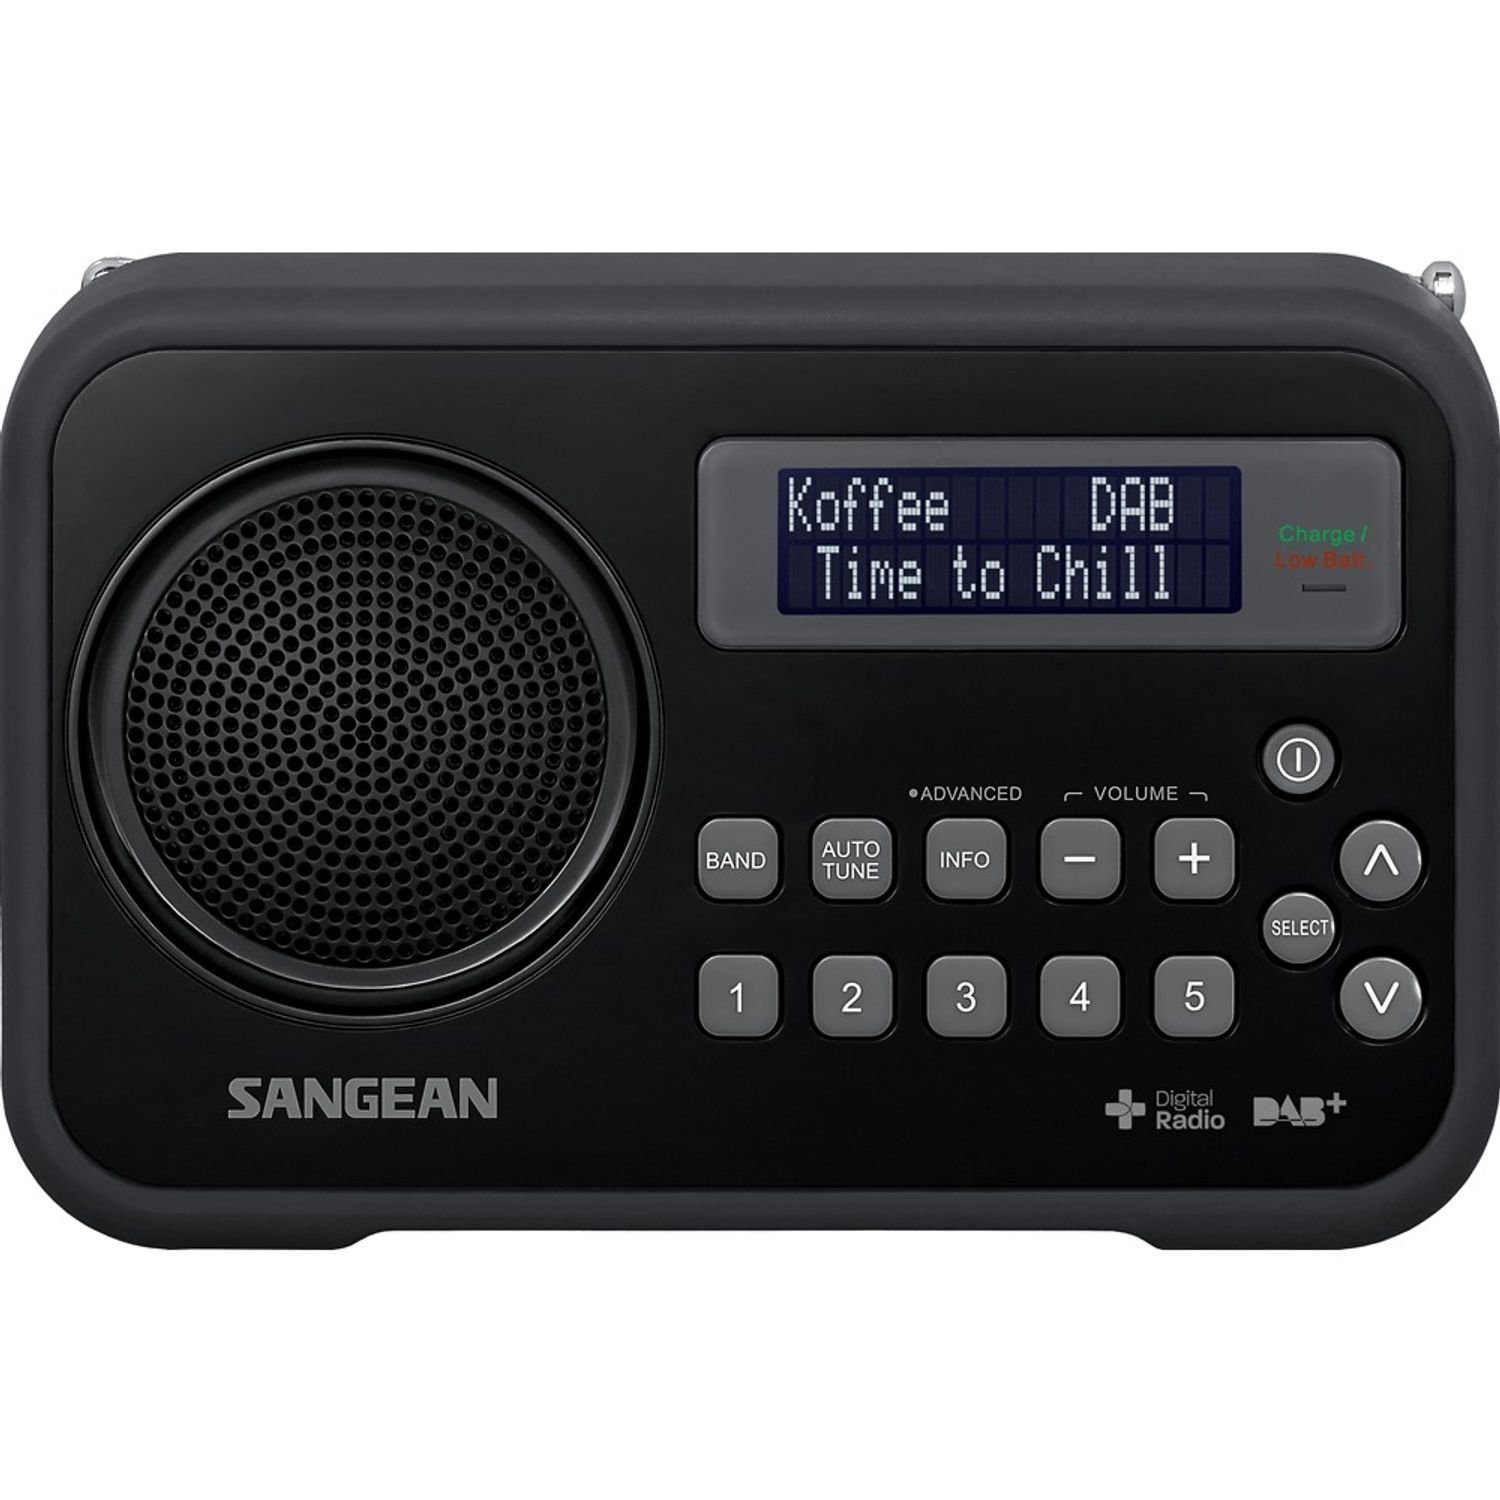 Digitalempfänger Sangean (DAB) DAB+ / DPR-67 Digitalradio schwarz (DAB) FM-RDS